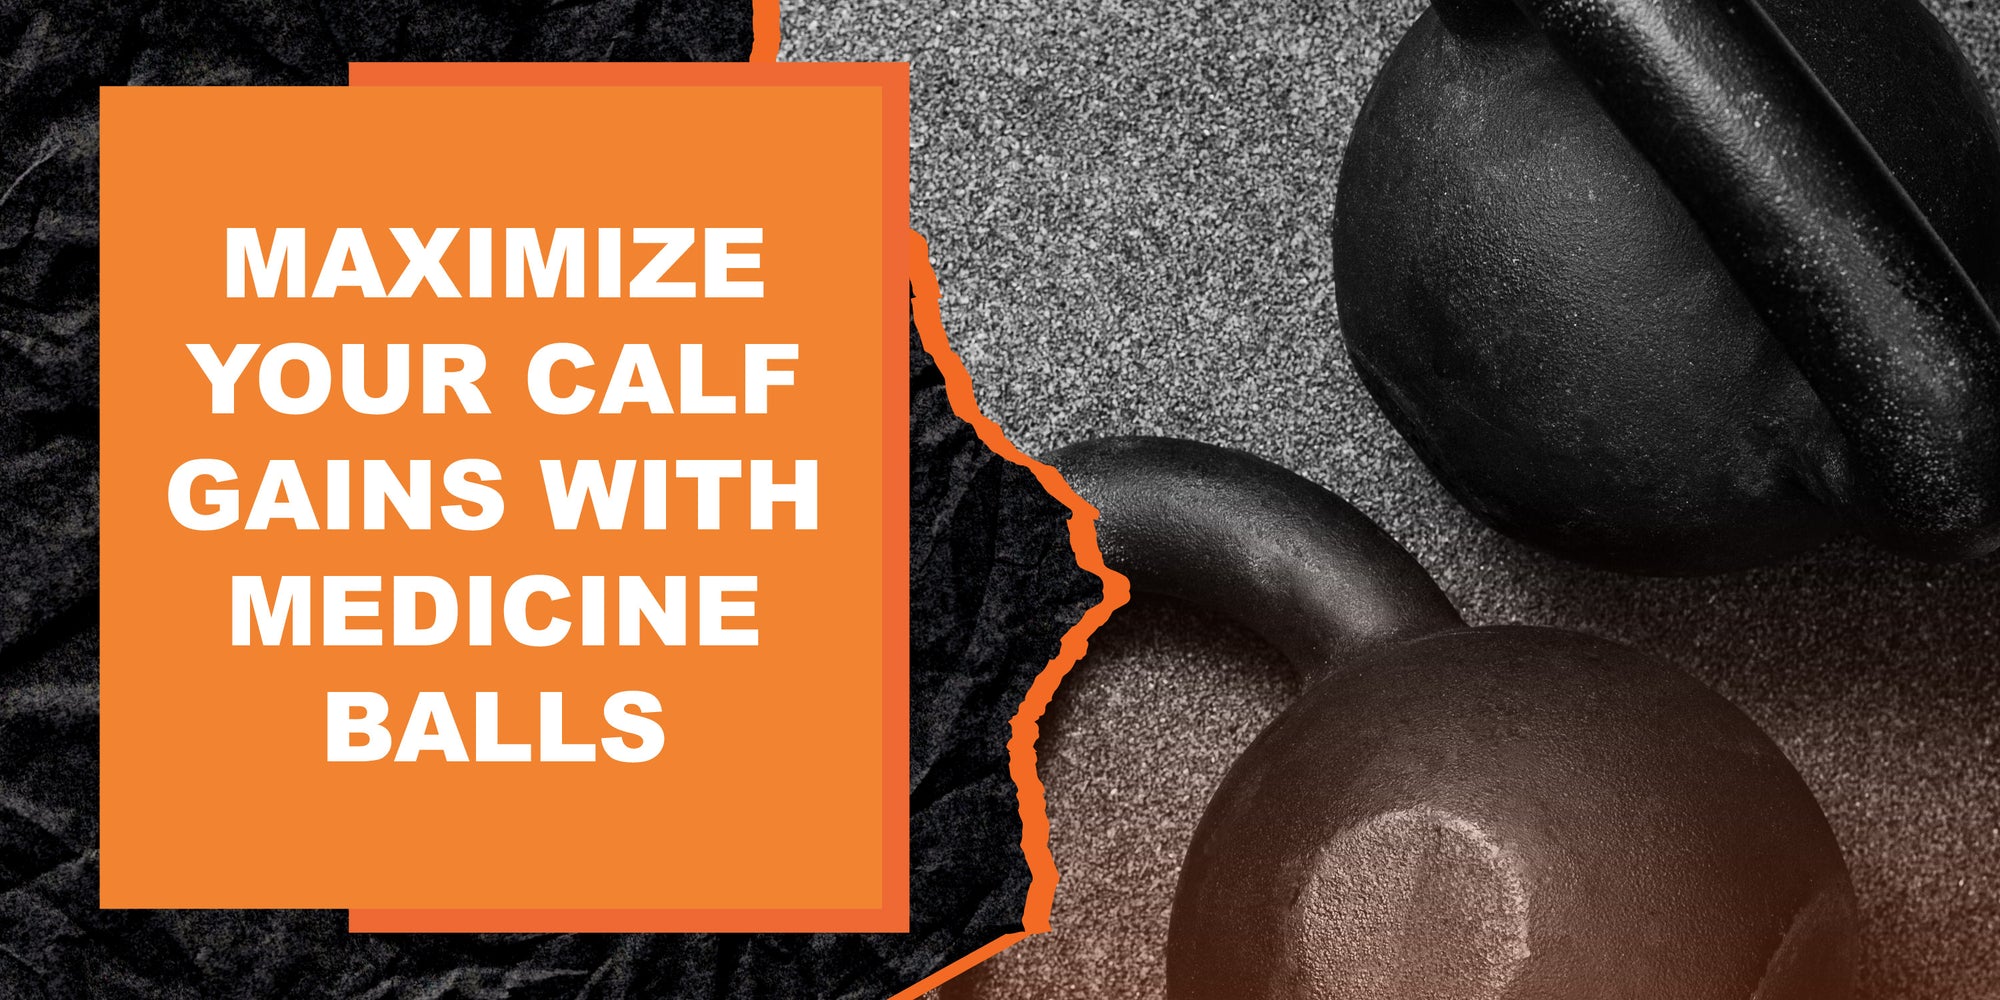 Maximize Your Calf Gains with Medicine Balls